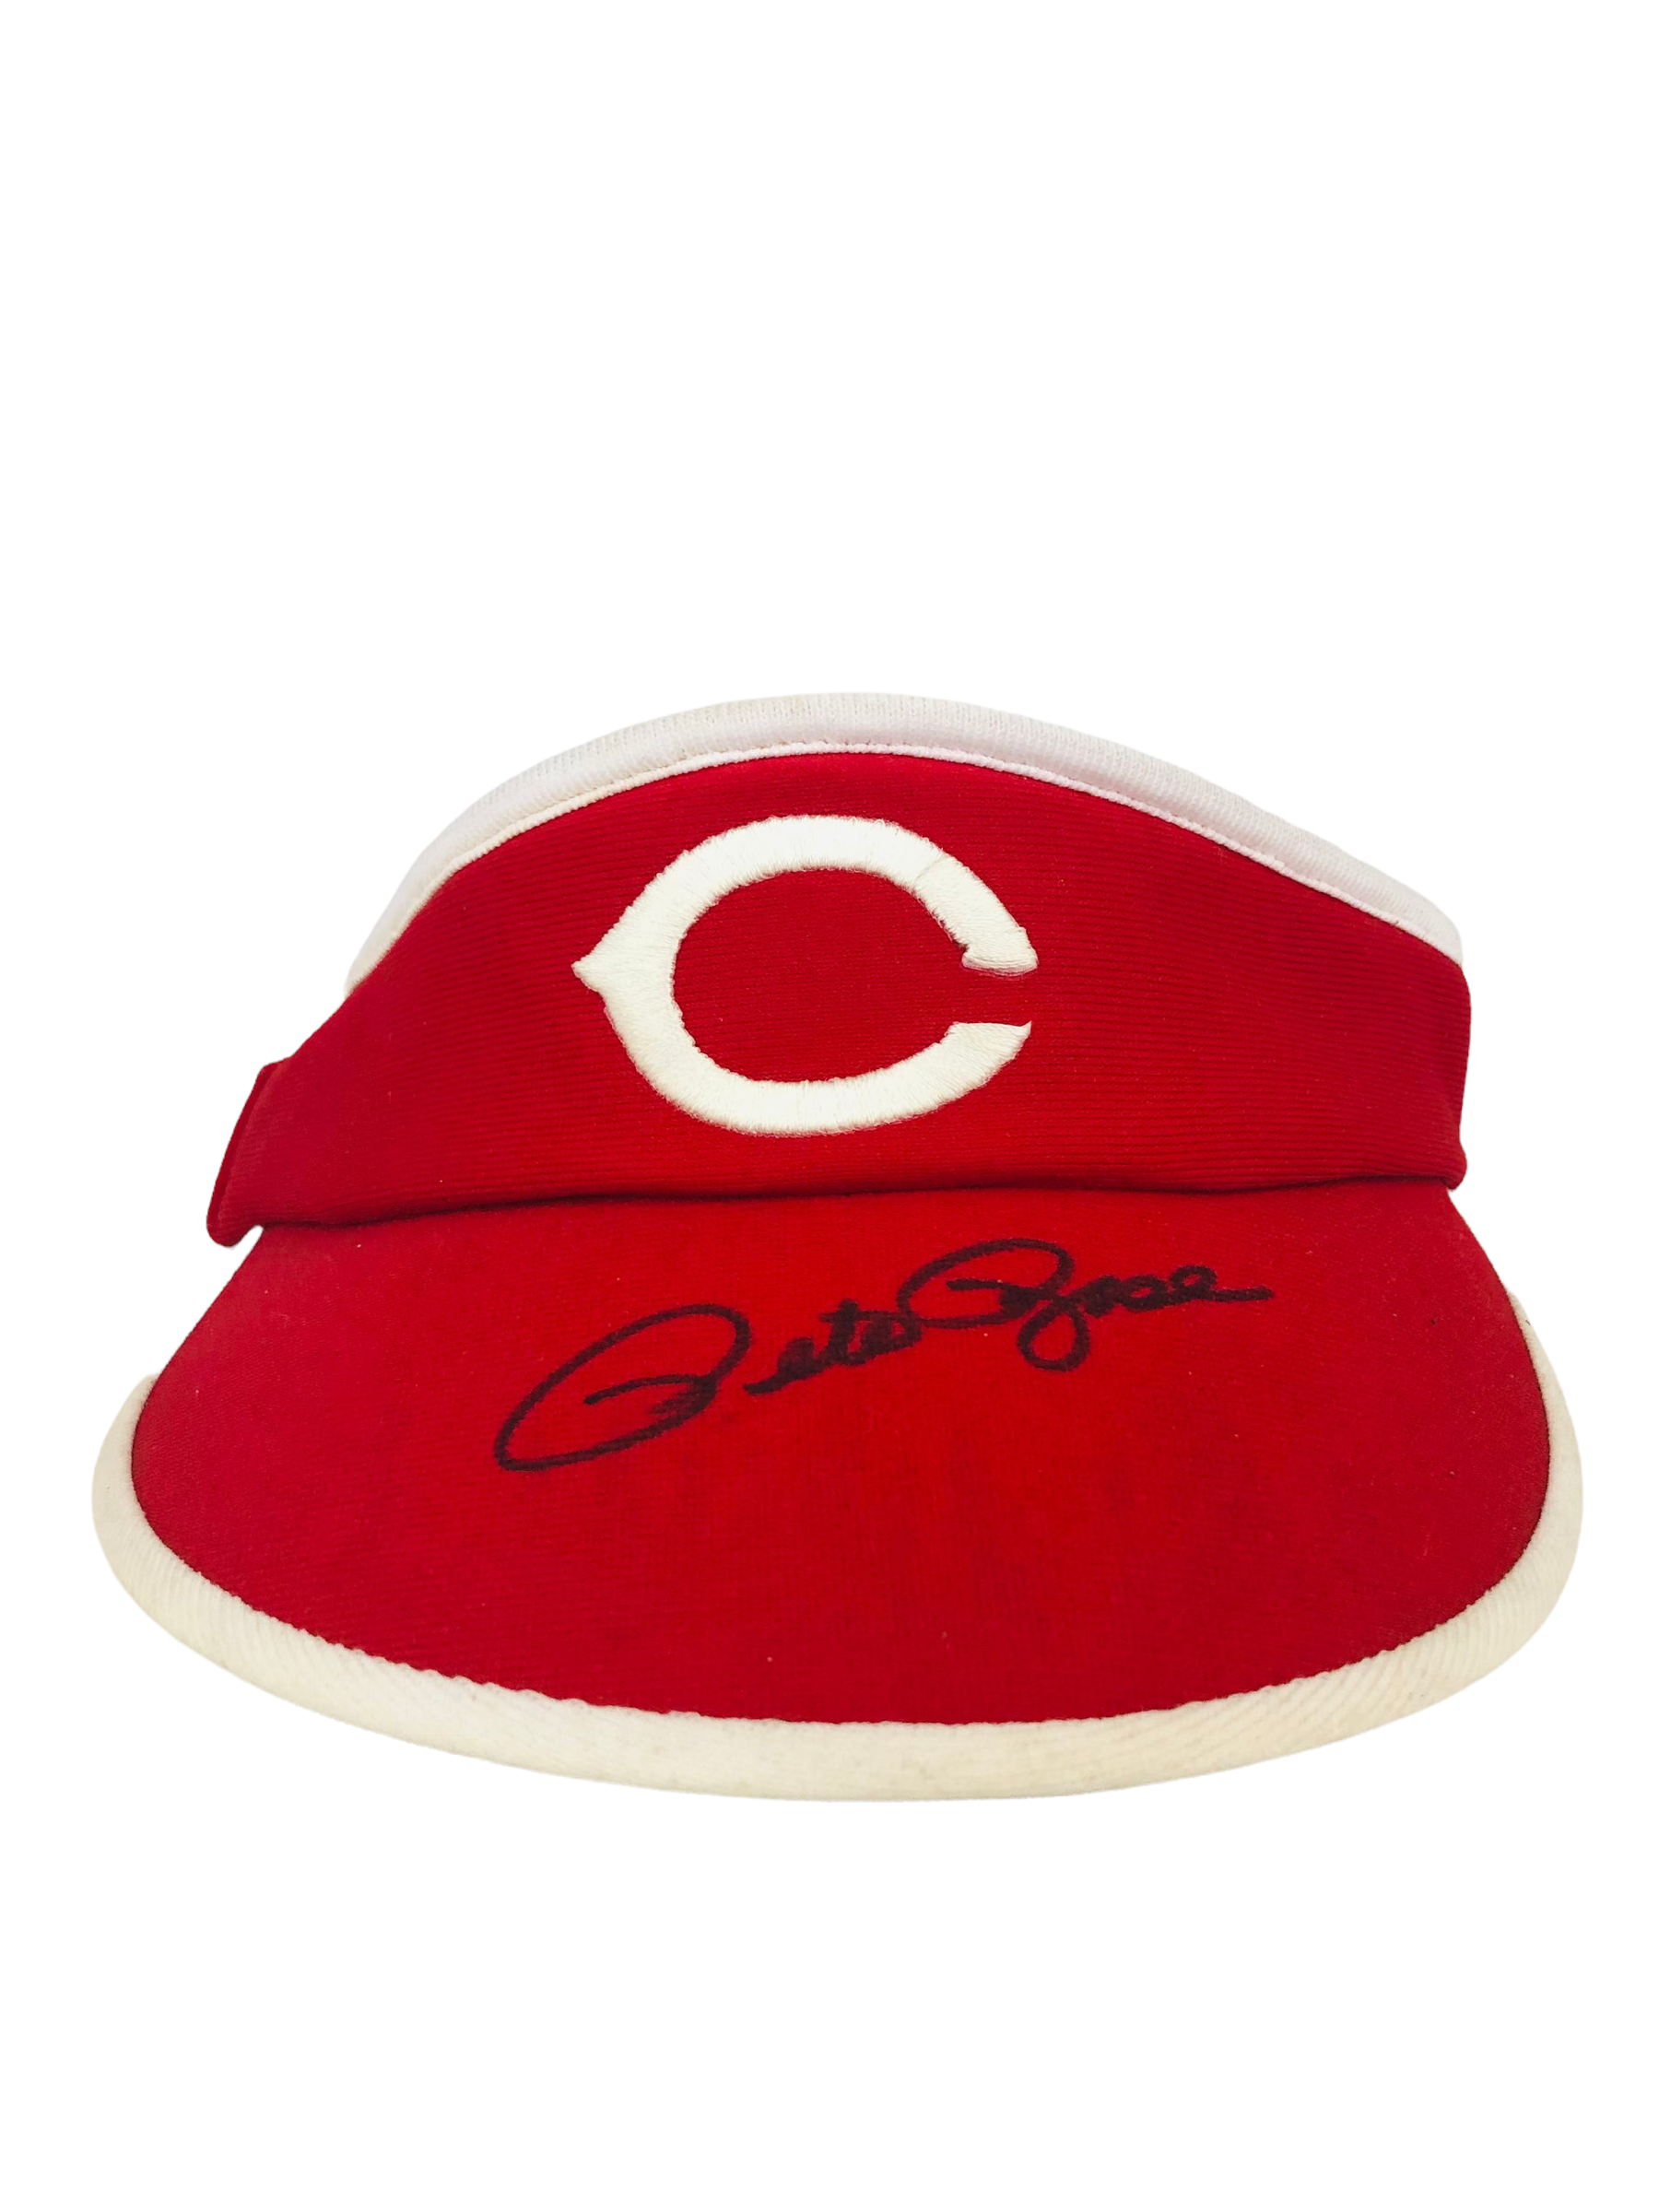 New Era, Accessories, Cincinnati Reds Throwback Mlb Hat